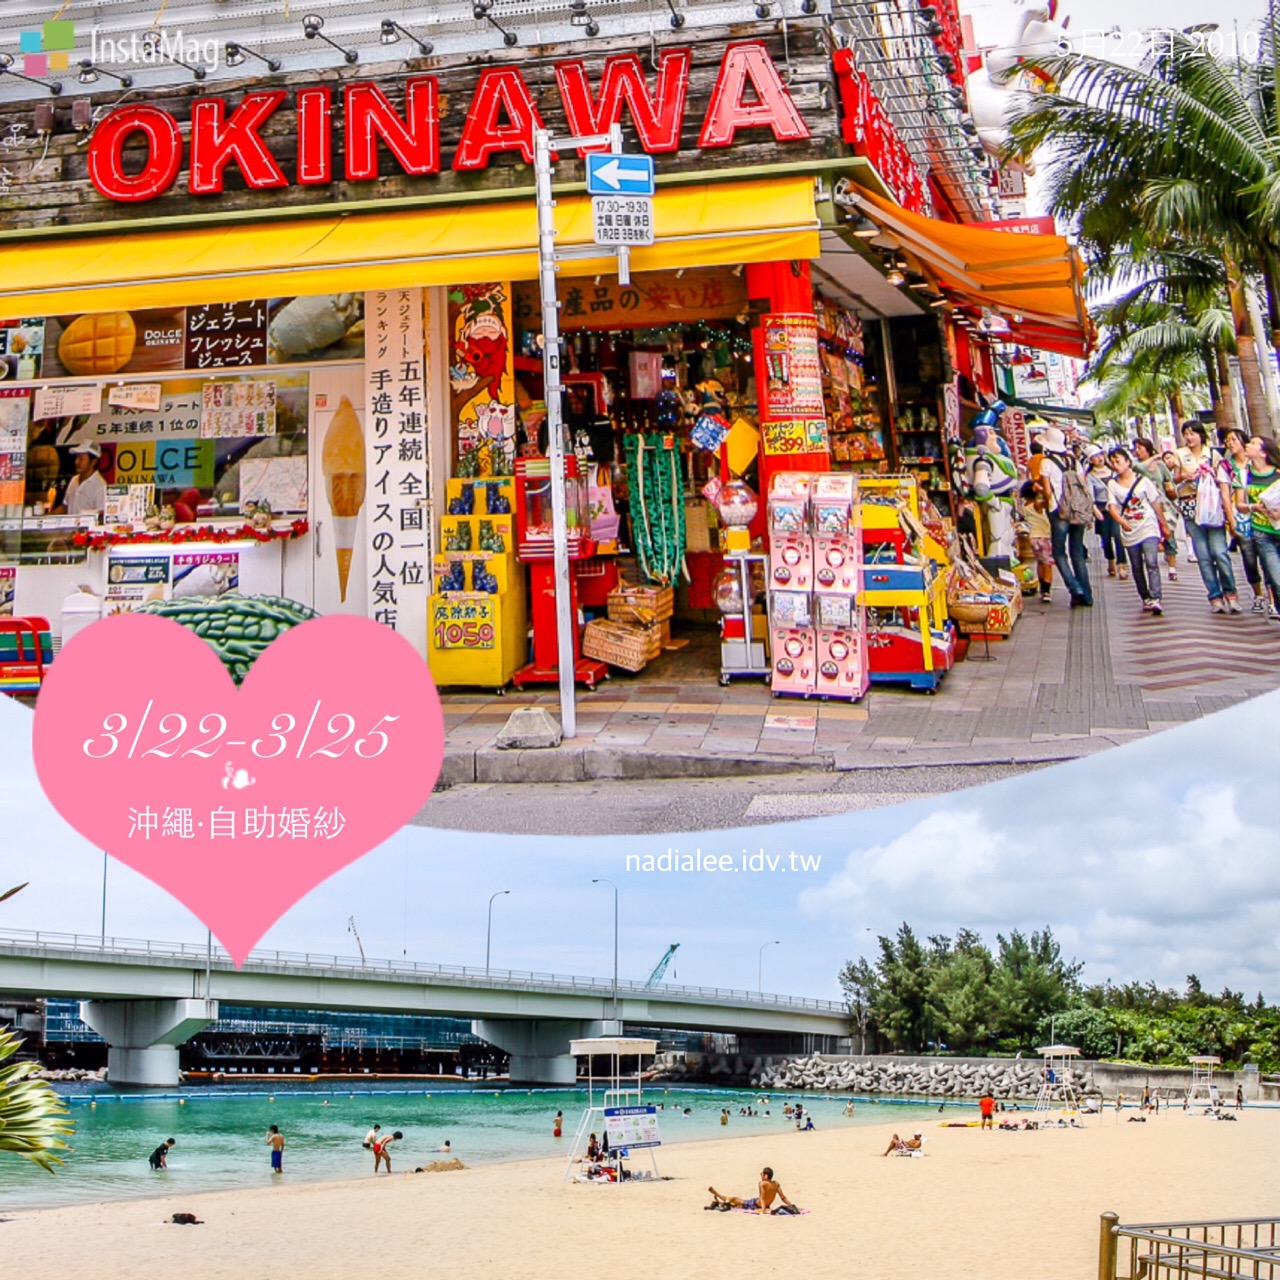 Nadia將於3/22～3/25,2015 在沖繩Okinawa工作
日本海外自助婚紗造型
期間若有需詢問整體造型服務或新娘秘書洽詢檔期的朋友們
請Email:lee_nadialee@yahoo.com.tw
或 留言至FB訊息 我將會儘快與您聯繫!!